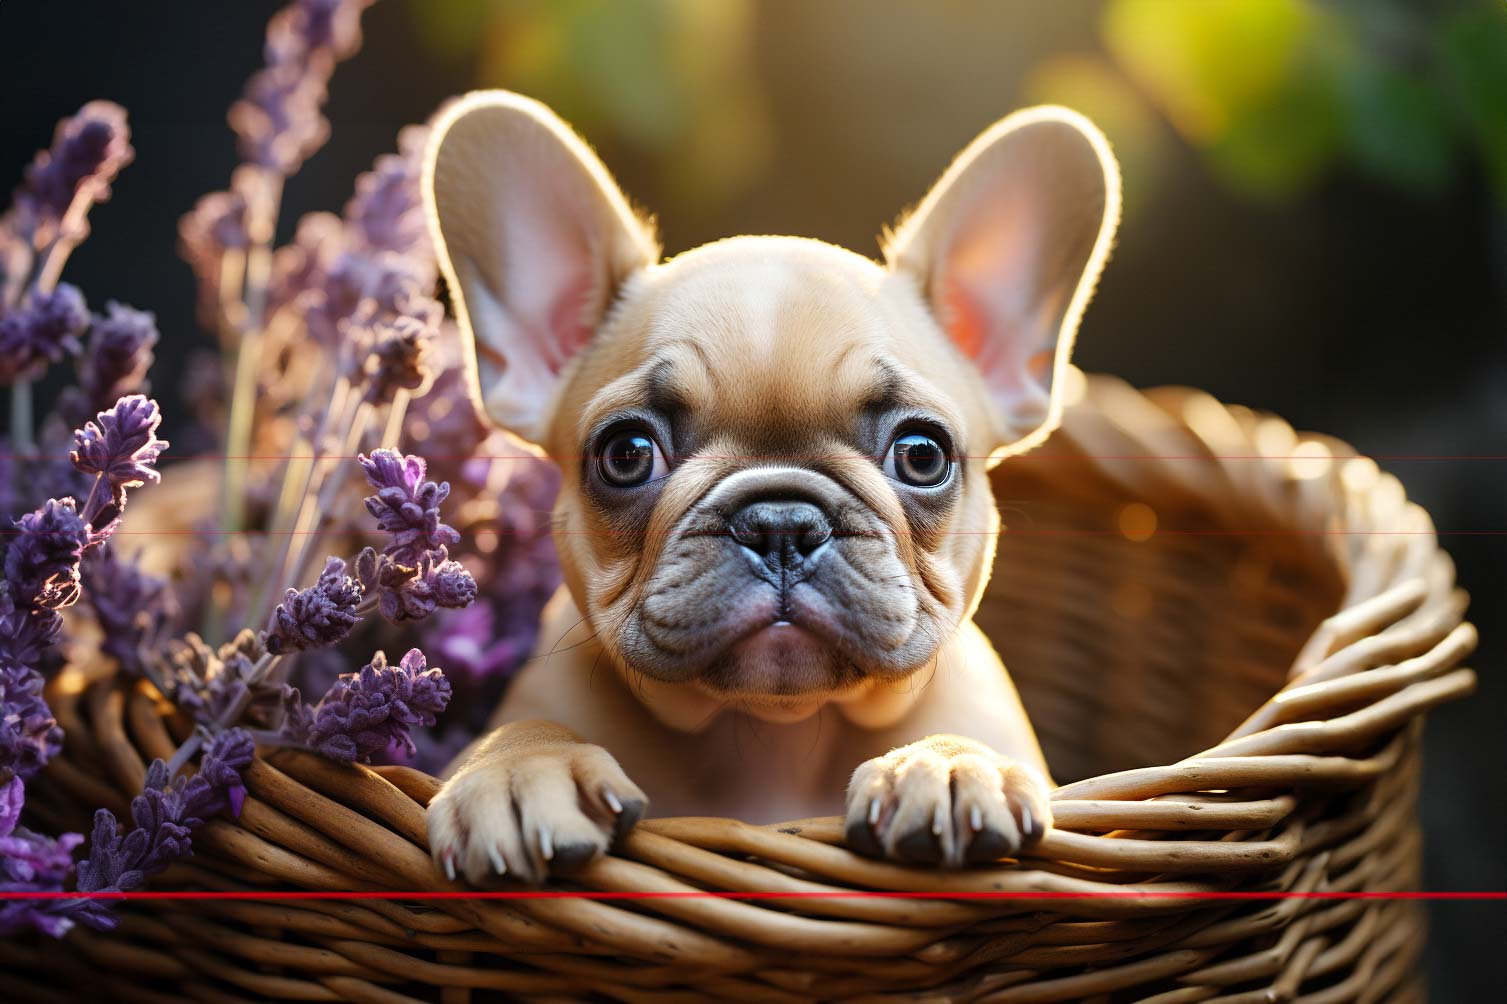 Cream & White French Bulldog Puppy In Basket with Lavender